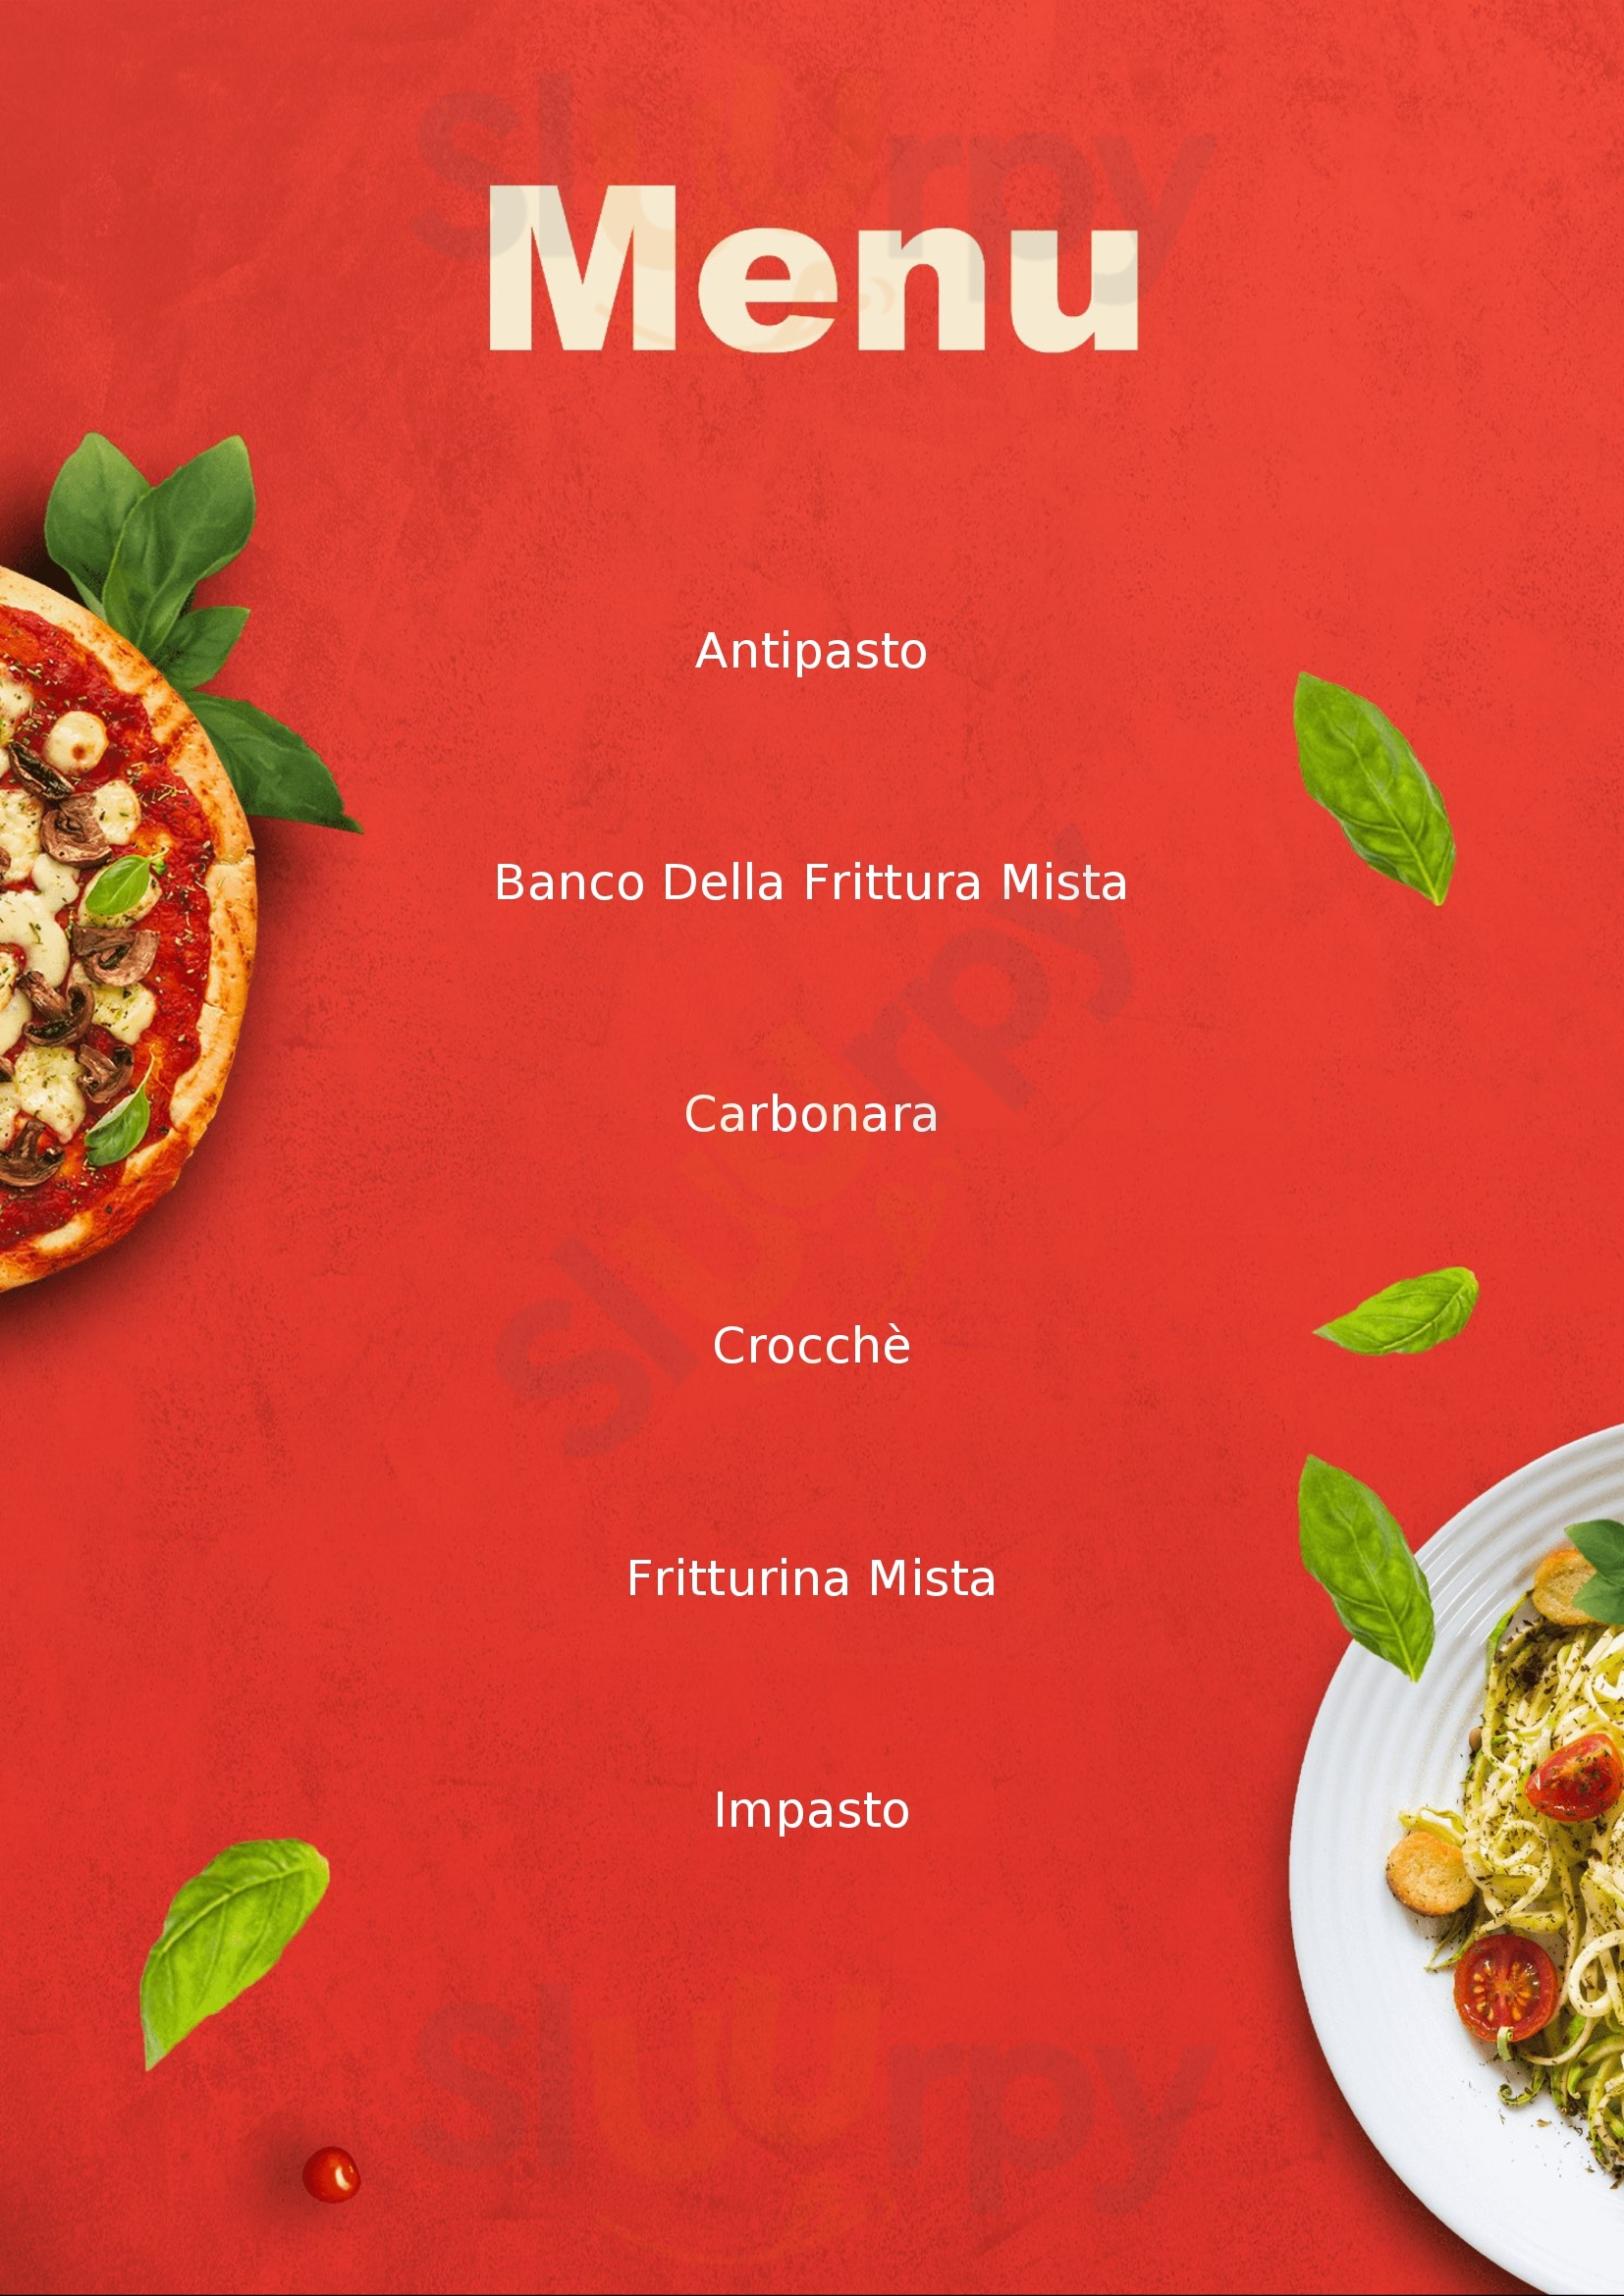 Pizzeria addu carmeniell Napoli menù 1 pagina